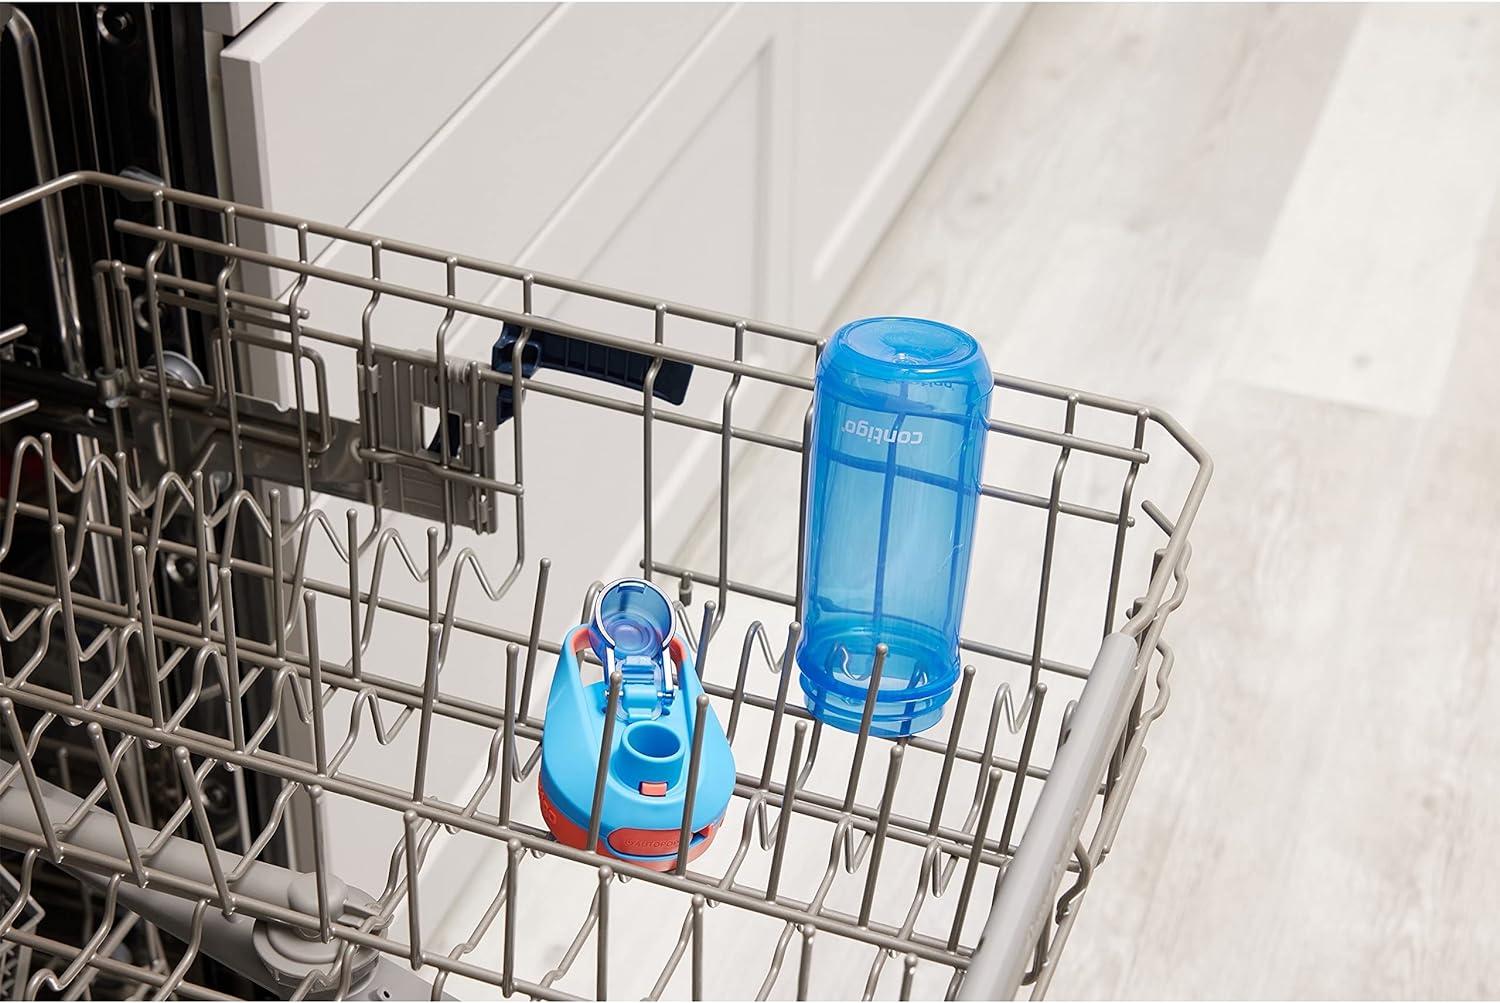  Contigo Jessie Kids Water Bottle with Leak-Proof Lid, 14oz  Dishwasher-Safe Kids Water Bottle, Fits Most Cup Holders, 2-Pack Blue  Poppy/Coral & Amethyst/Jade : Baby